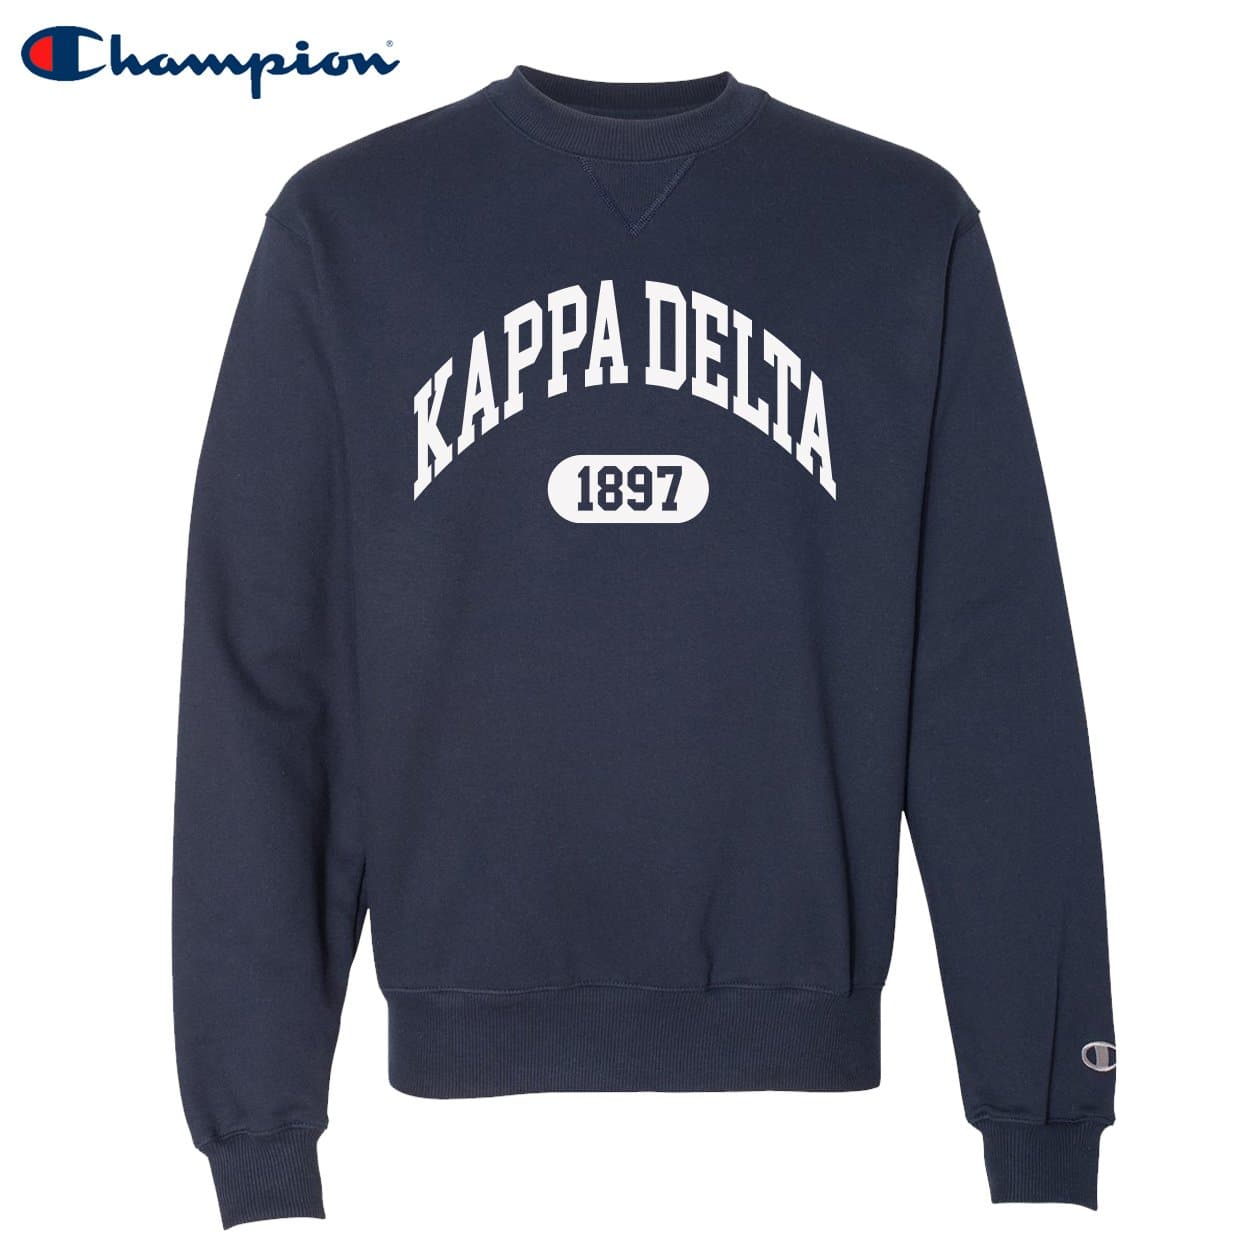 Kappa Delta Heavyweight Champion Crewneck Sweatshirt | Kappa Delta | Sweatshirts > Crewneck sweatshirts